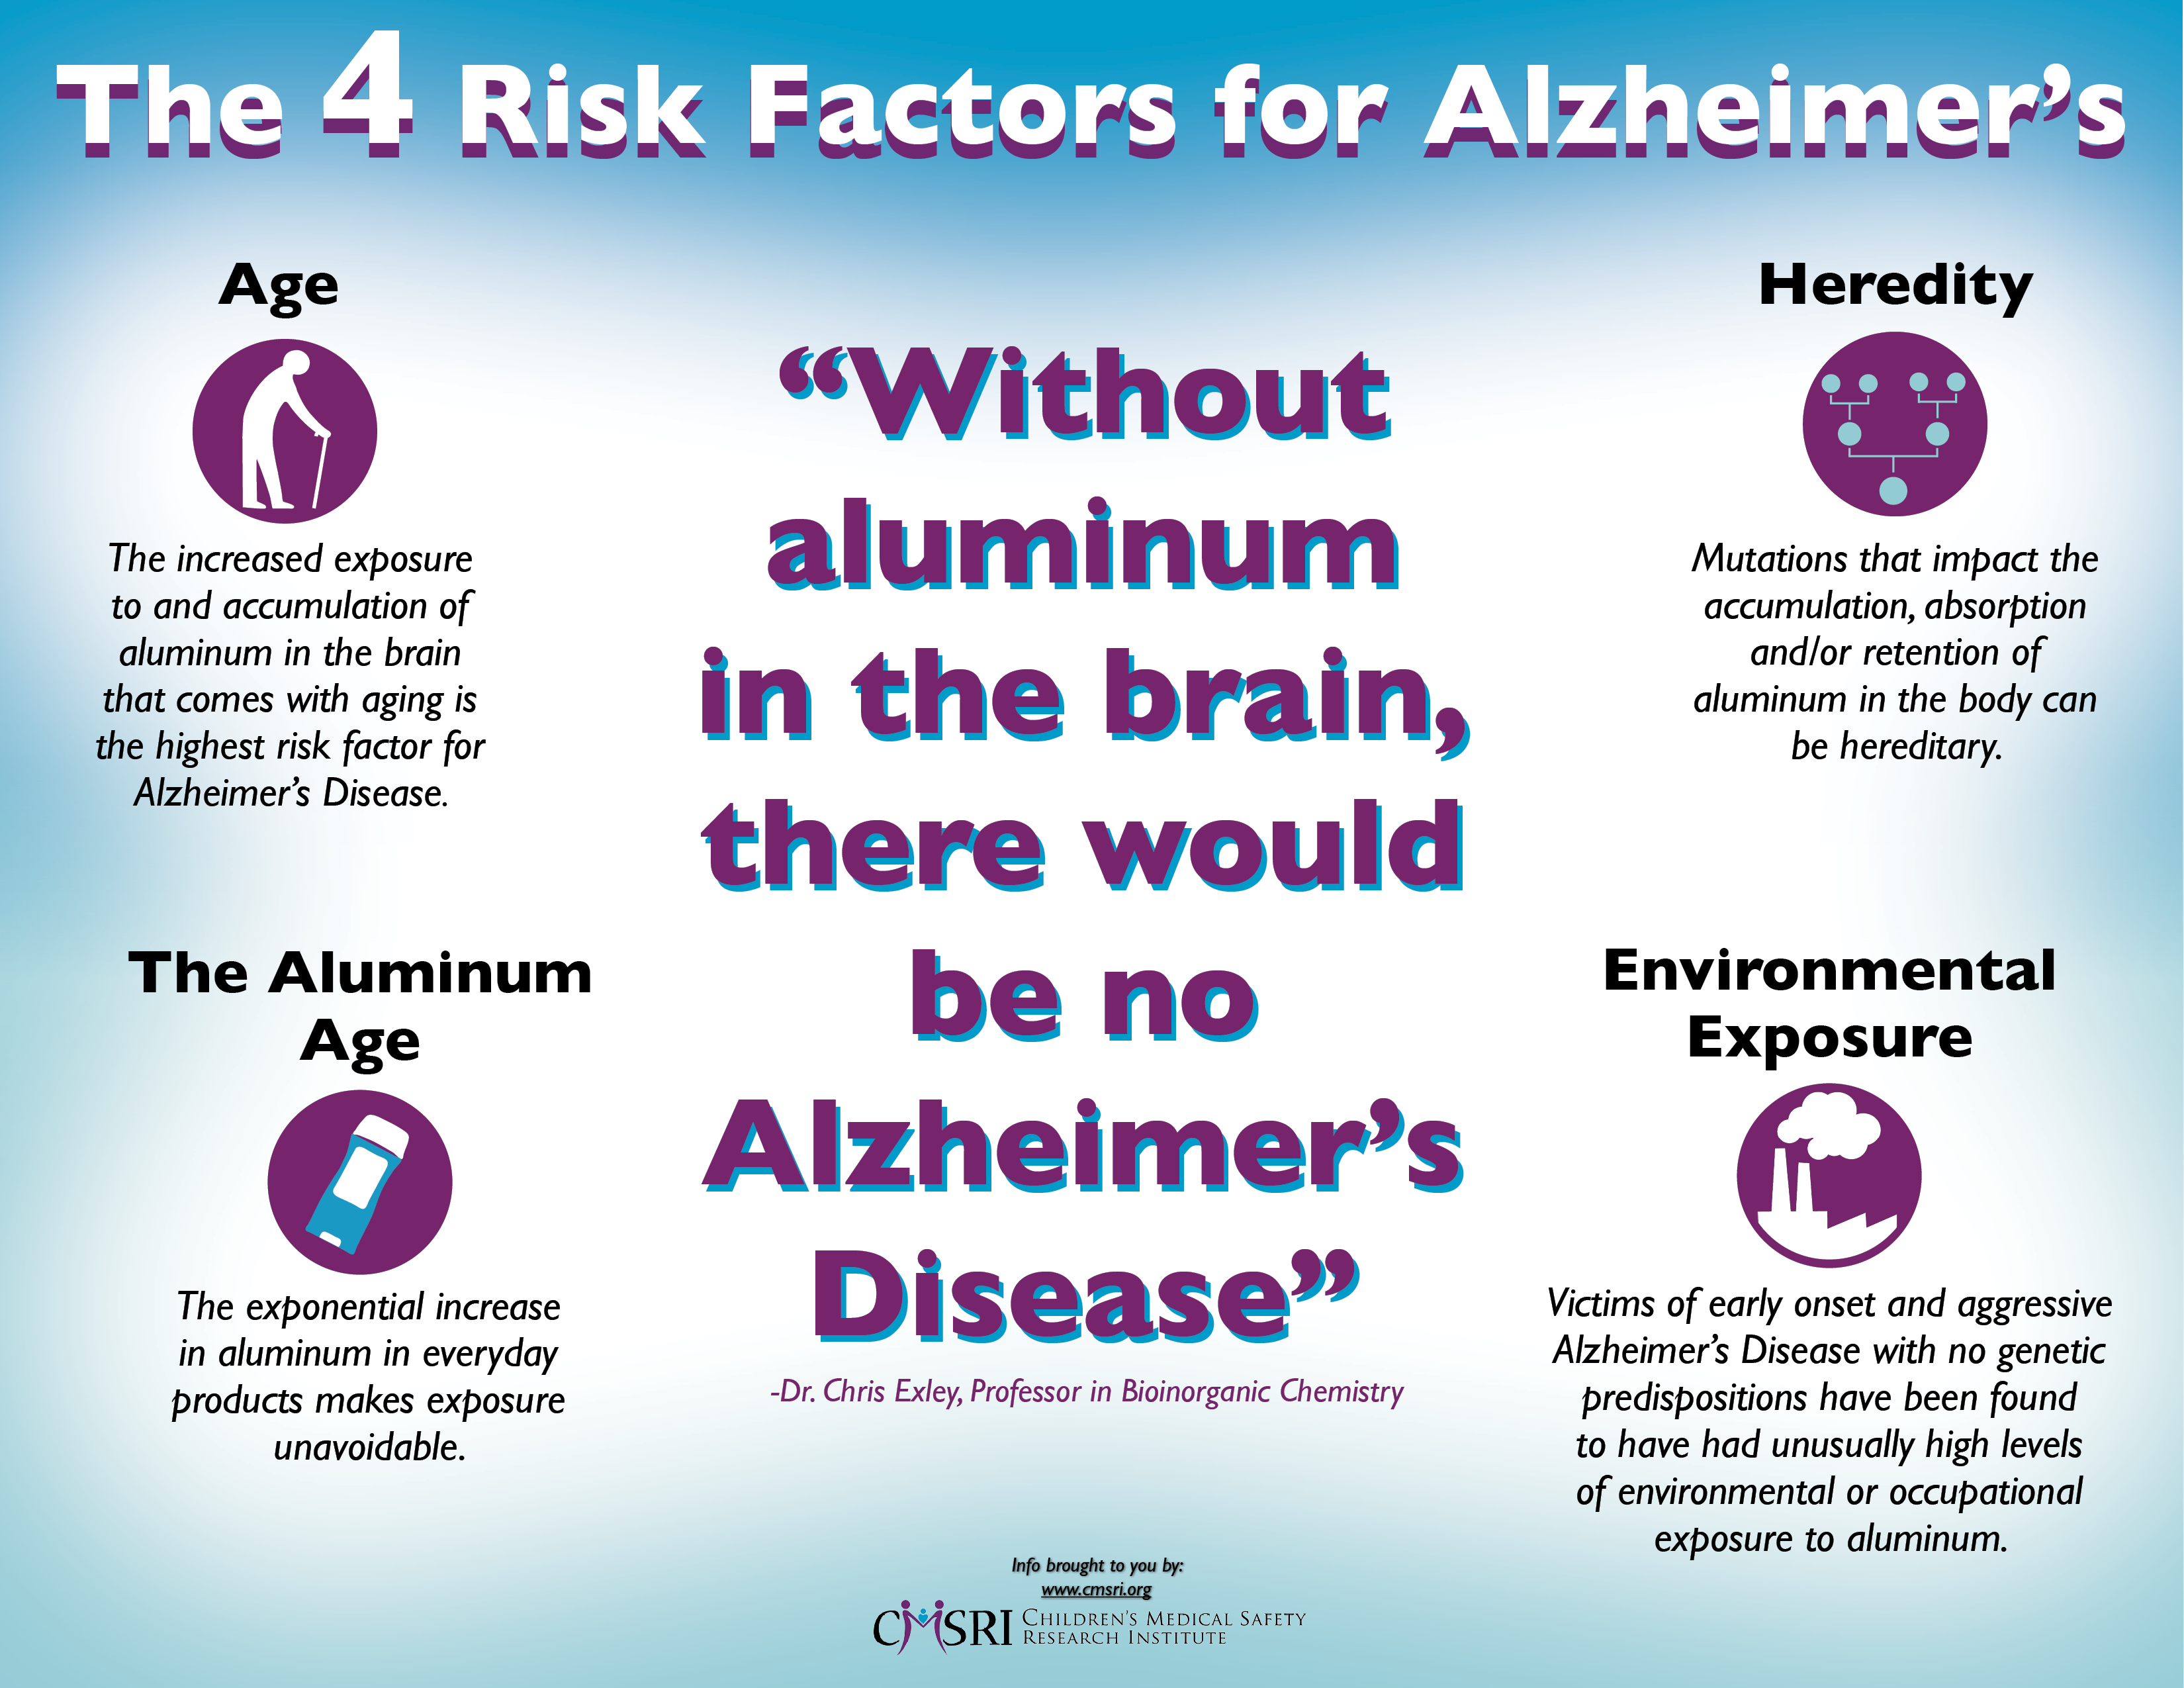 The Link Between Aluminum and Alzheimer's